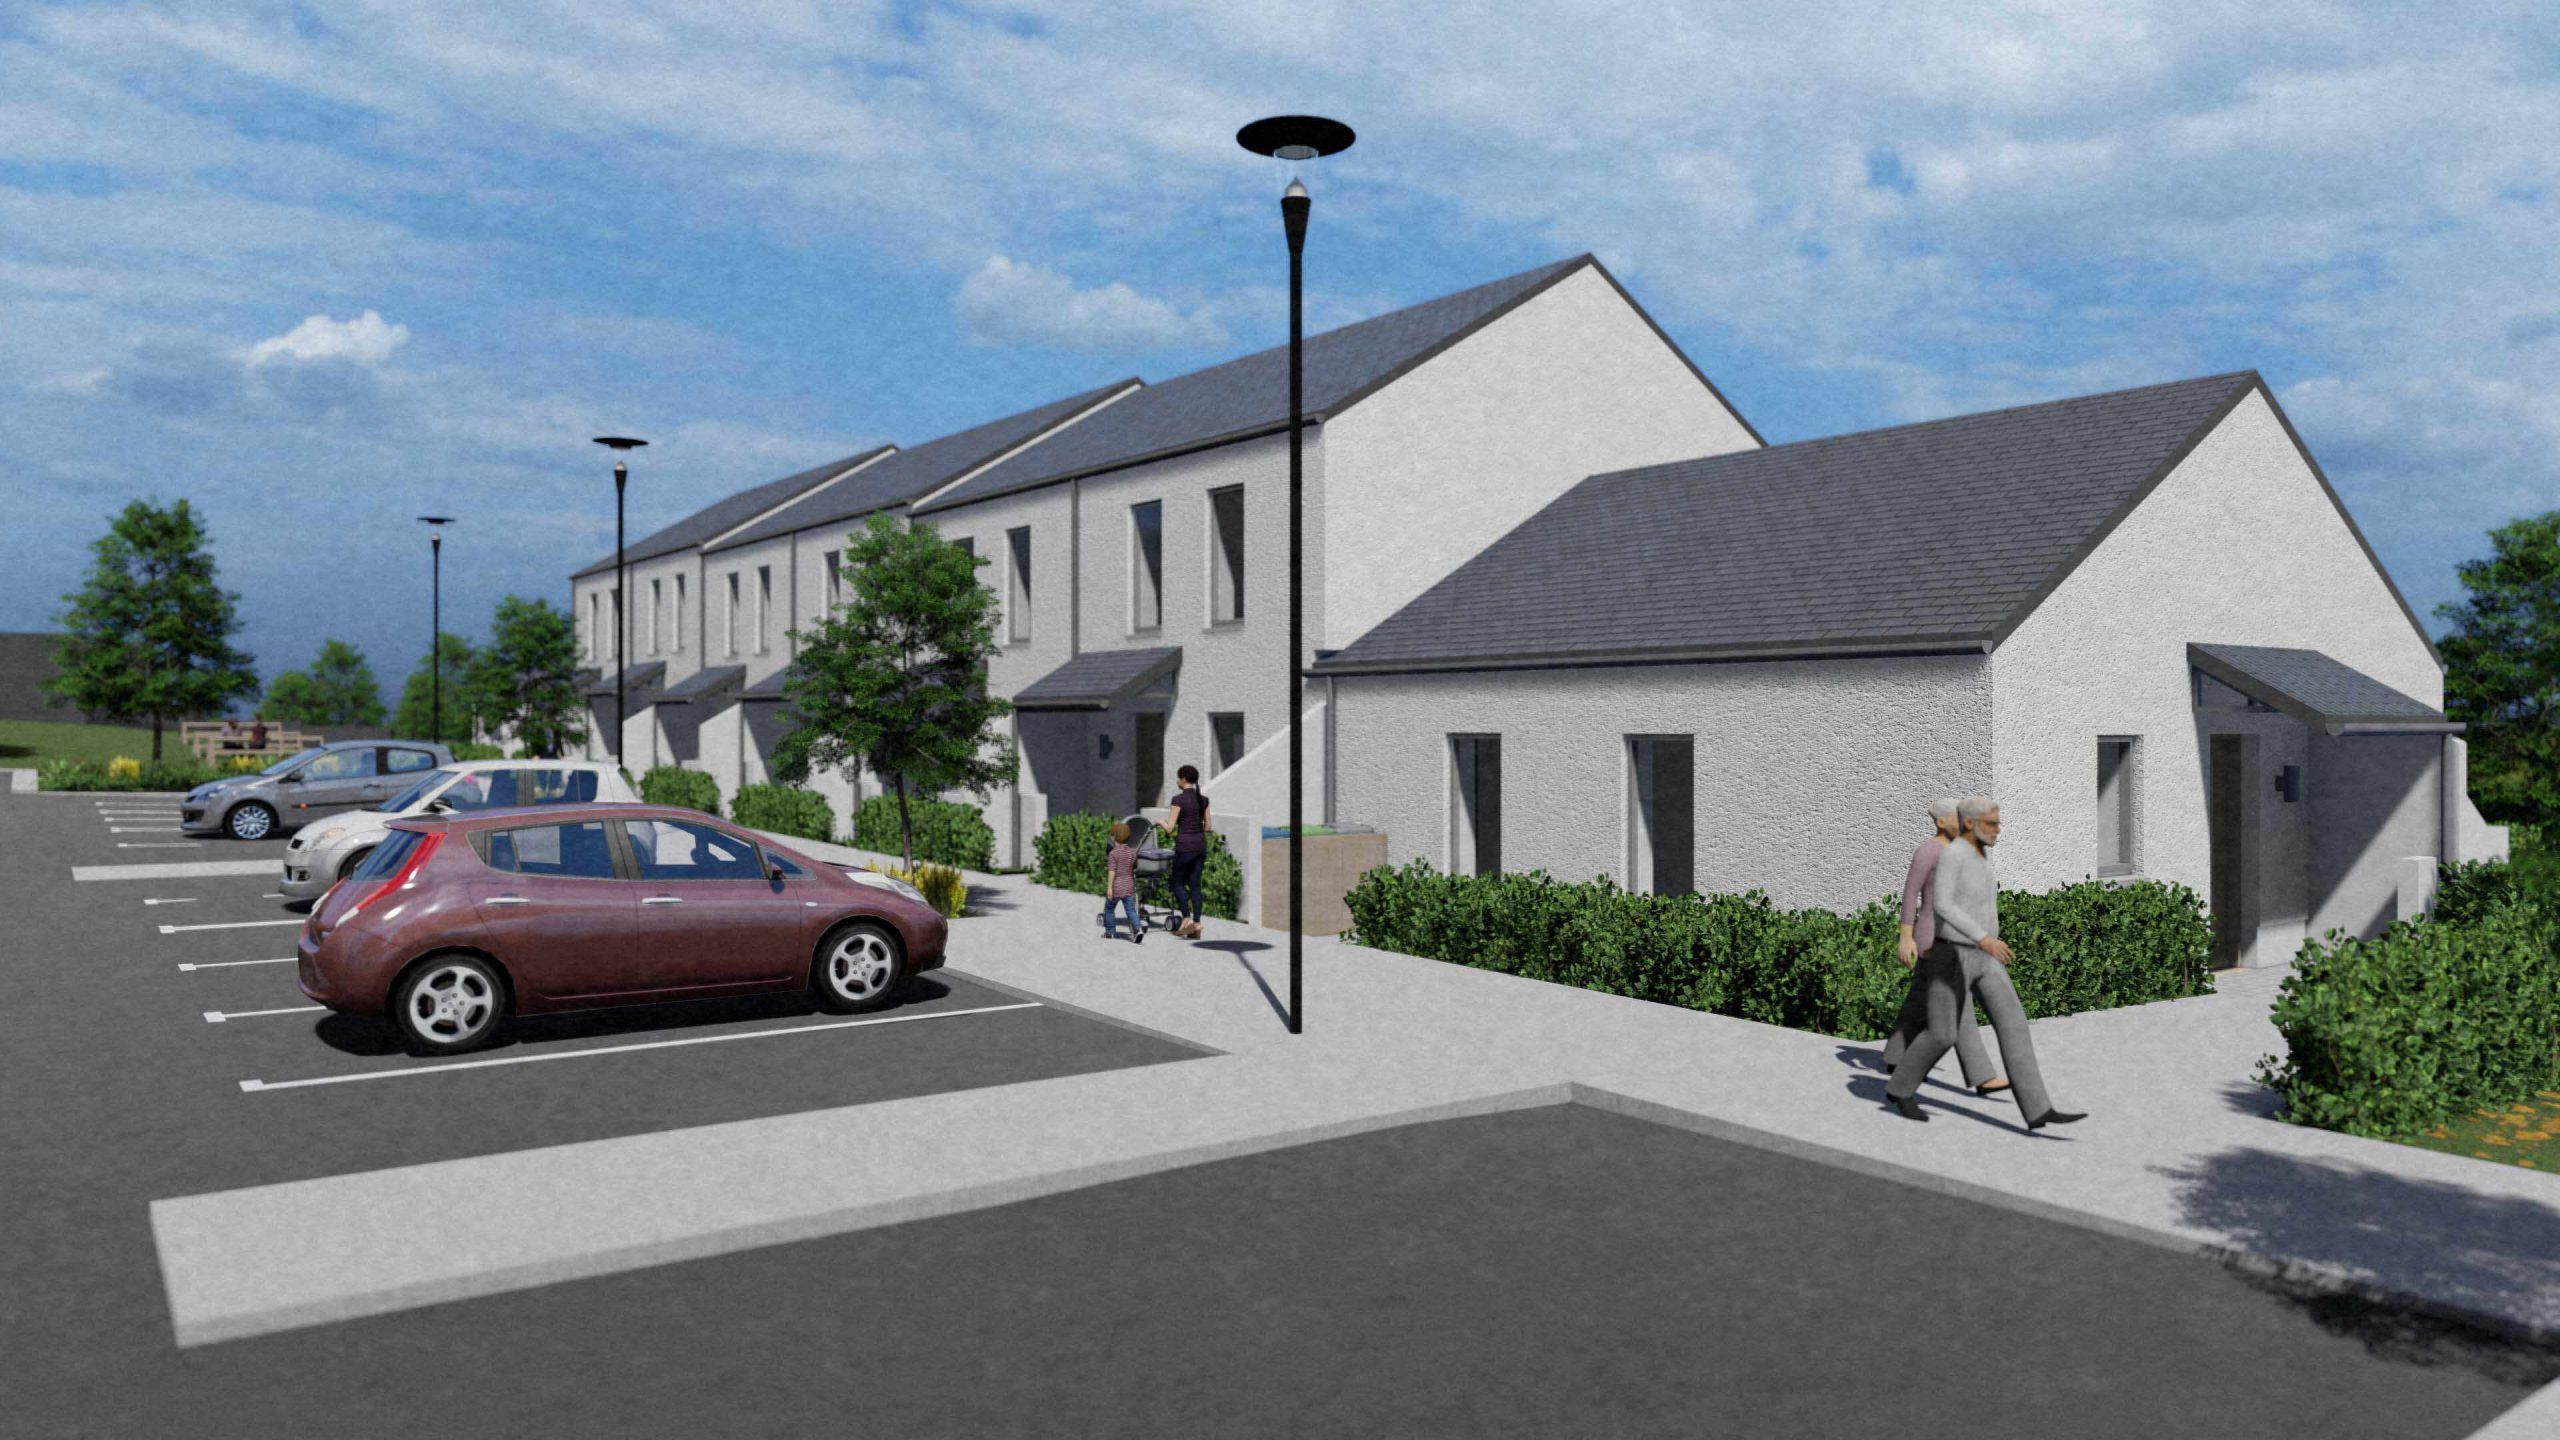 Work to begin on €4.8m housing developments in Ardrahan and Ballinasloe, Co Galway